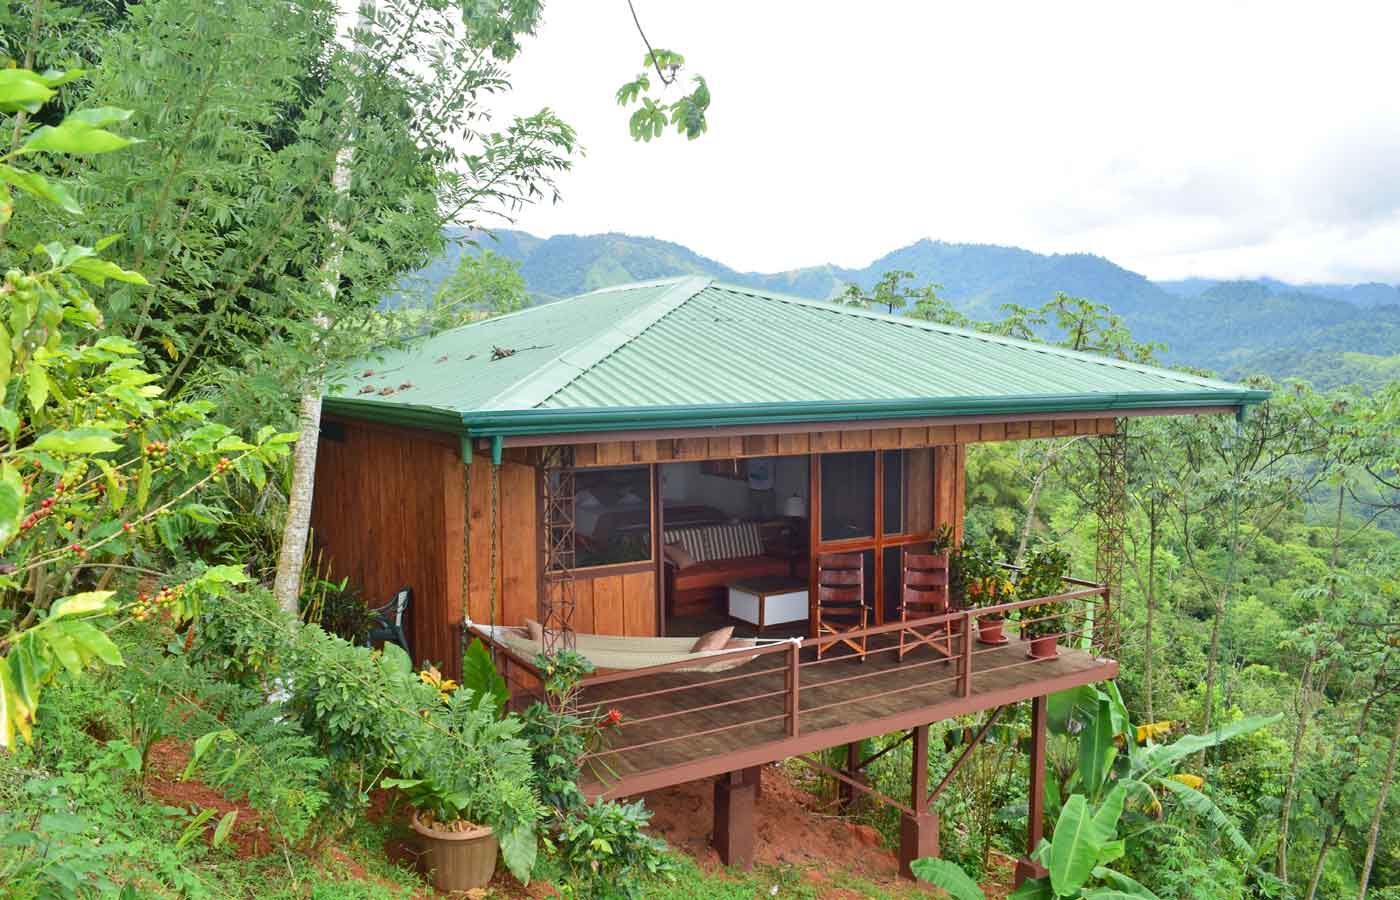 Santa Juana Lodge, Naranjito, Costa Rica